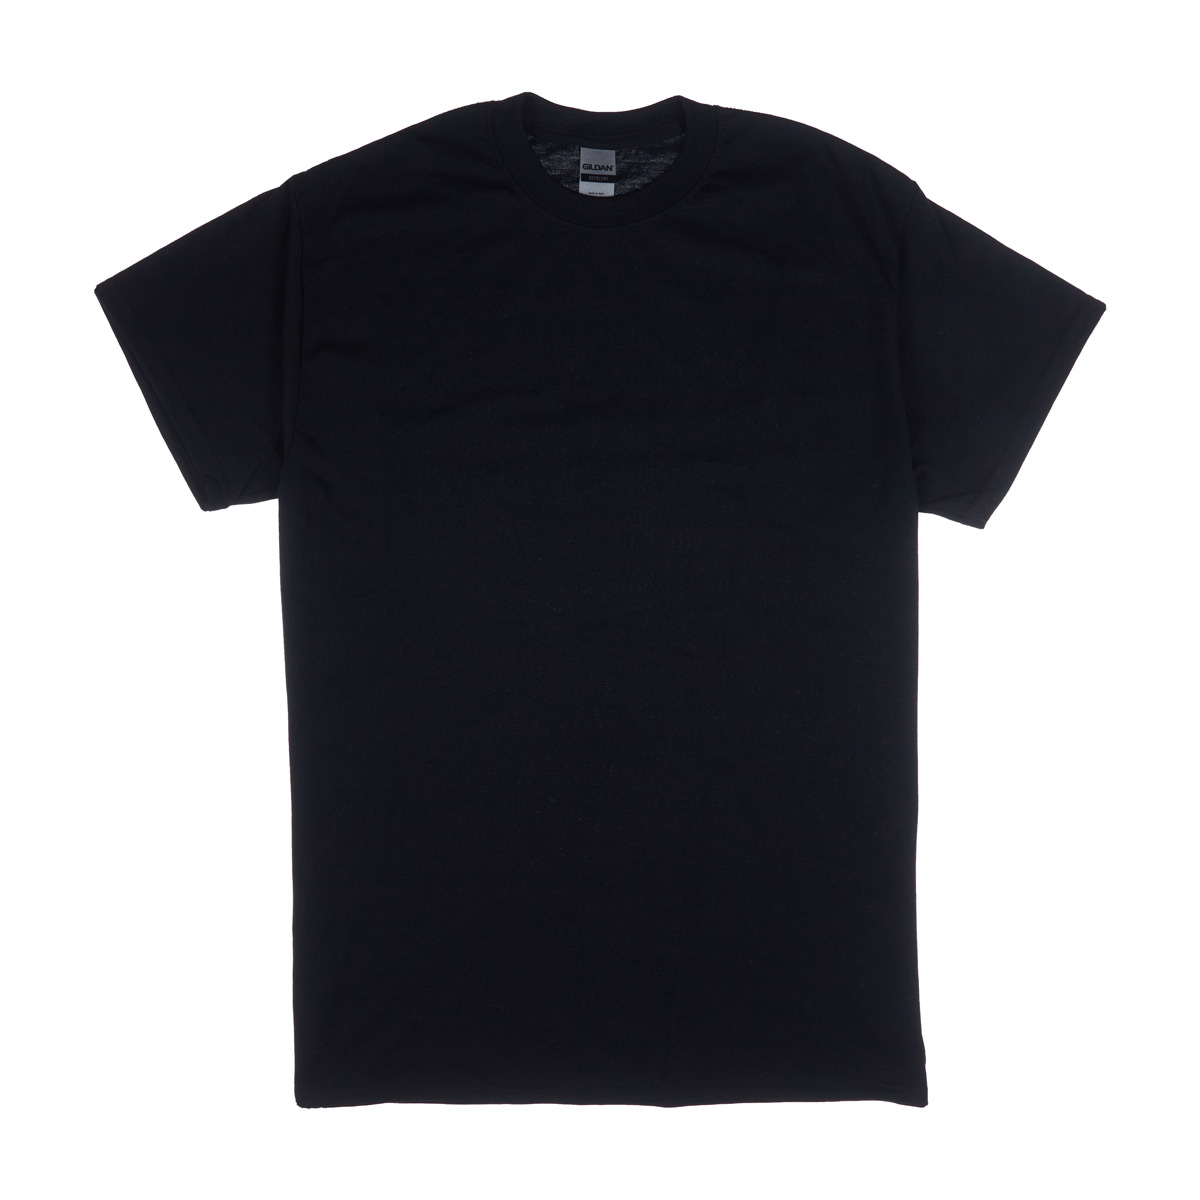 Gildan Solid Black T-Shirt, Medium